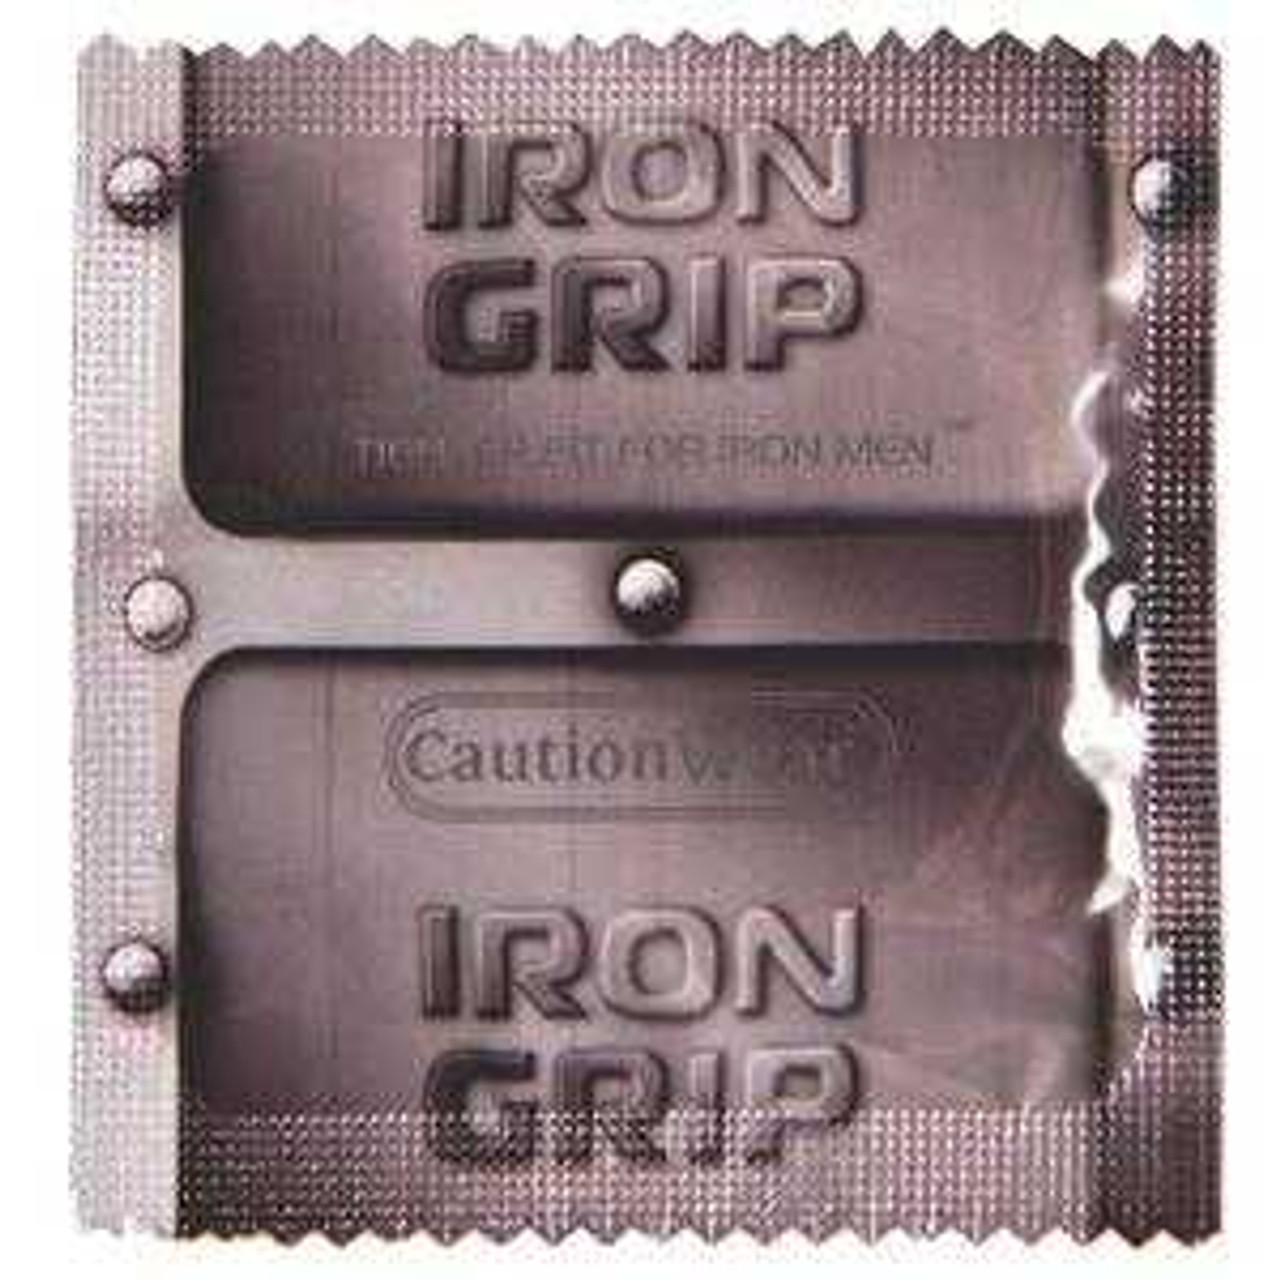 Caution Wear Iron Grip Condoms | Buy Caution Wear Condoms Online at CondomDepot.com